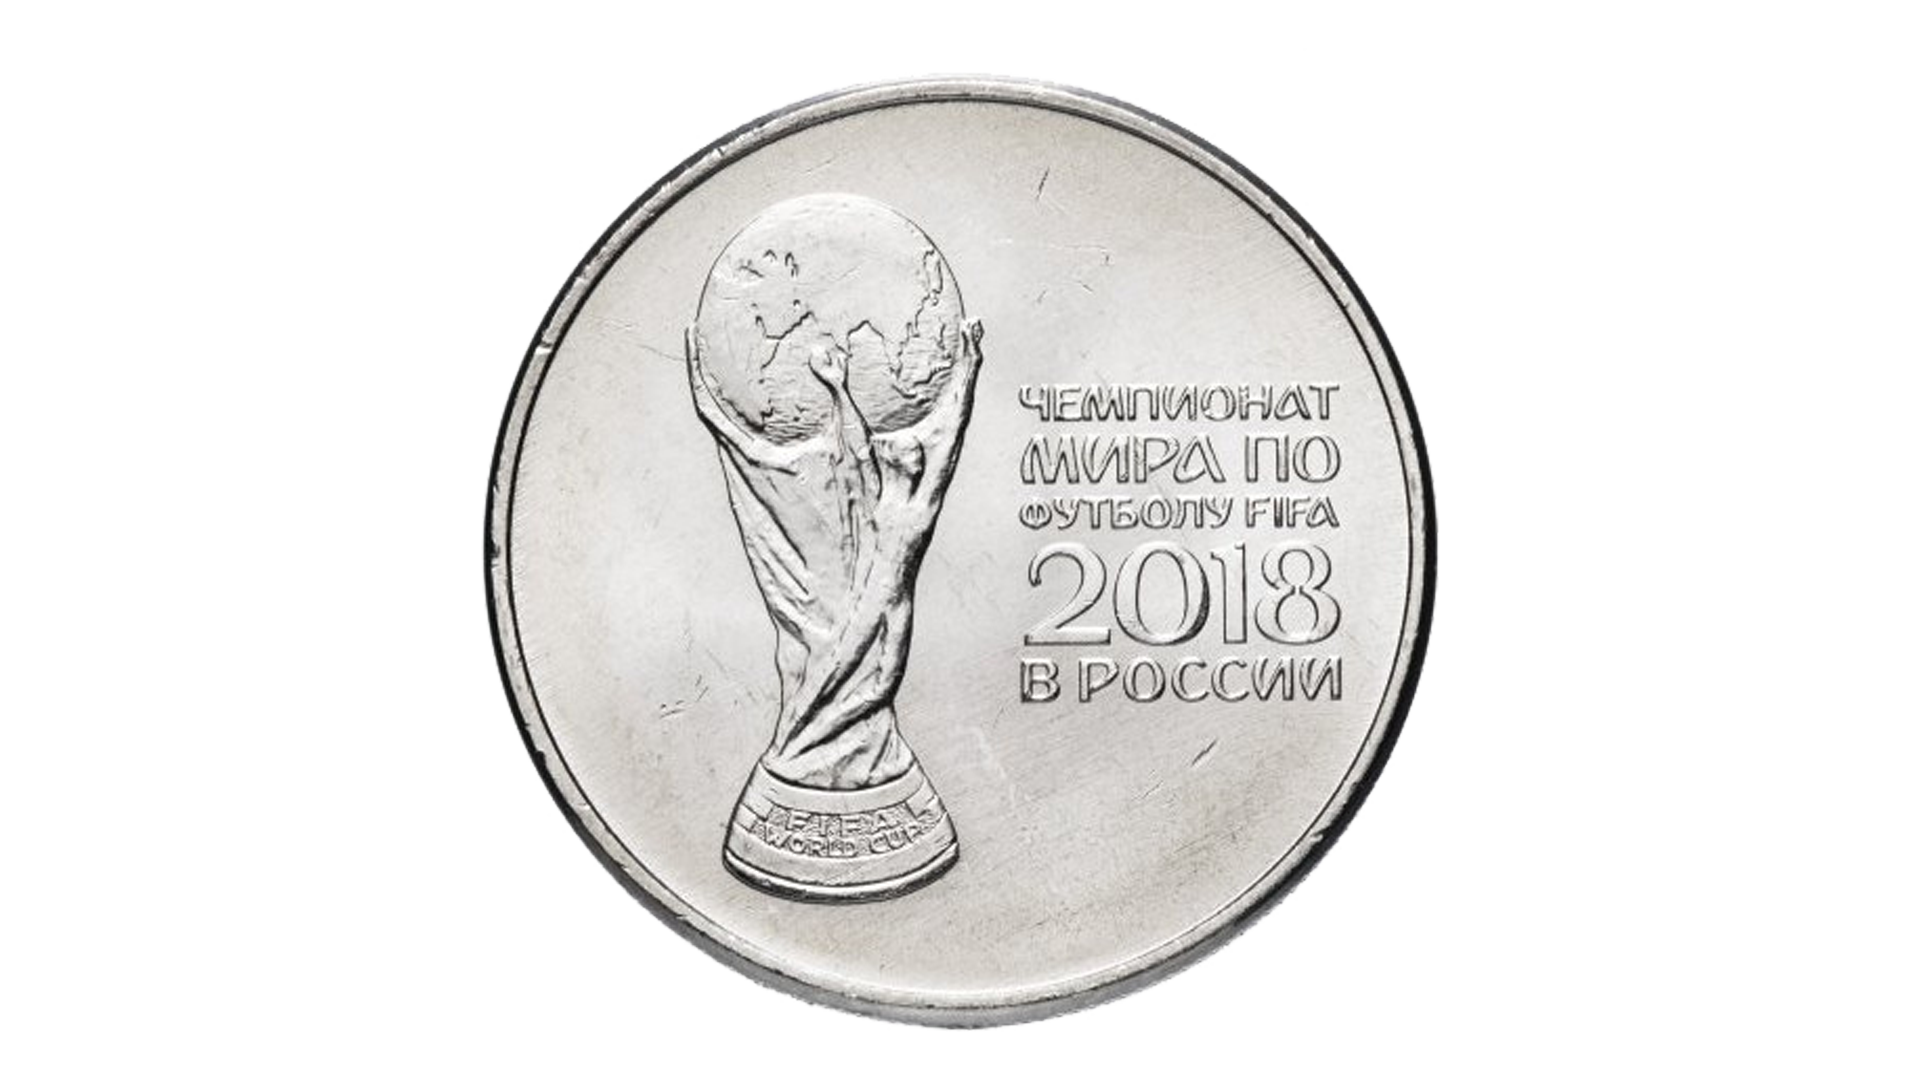 Fifa 2018 монеты 25 рублей. 25р монетой 2018 ФИФА.